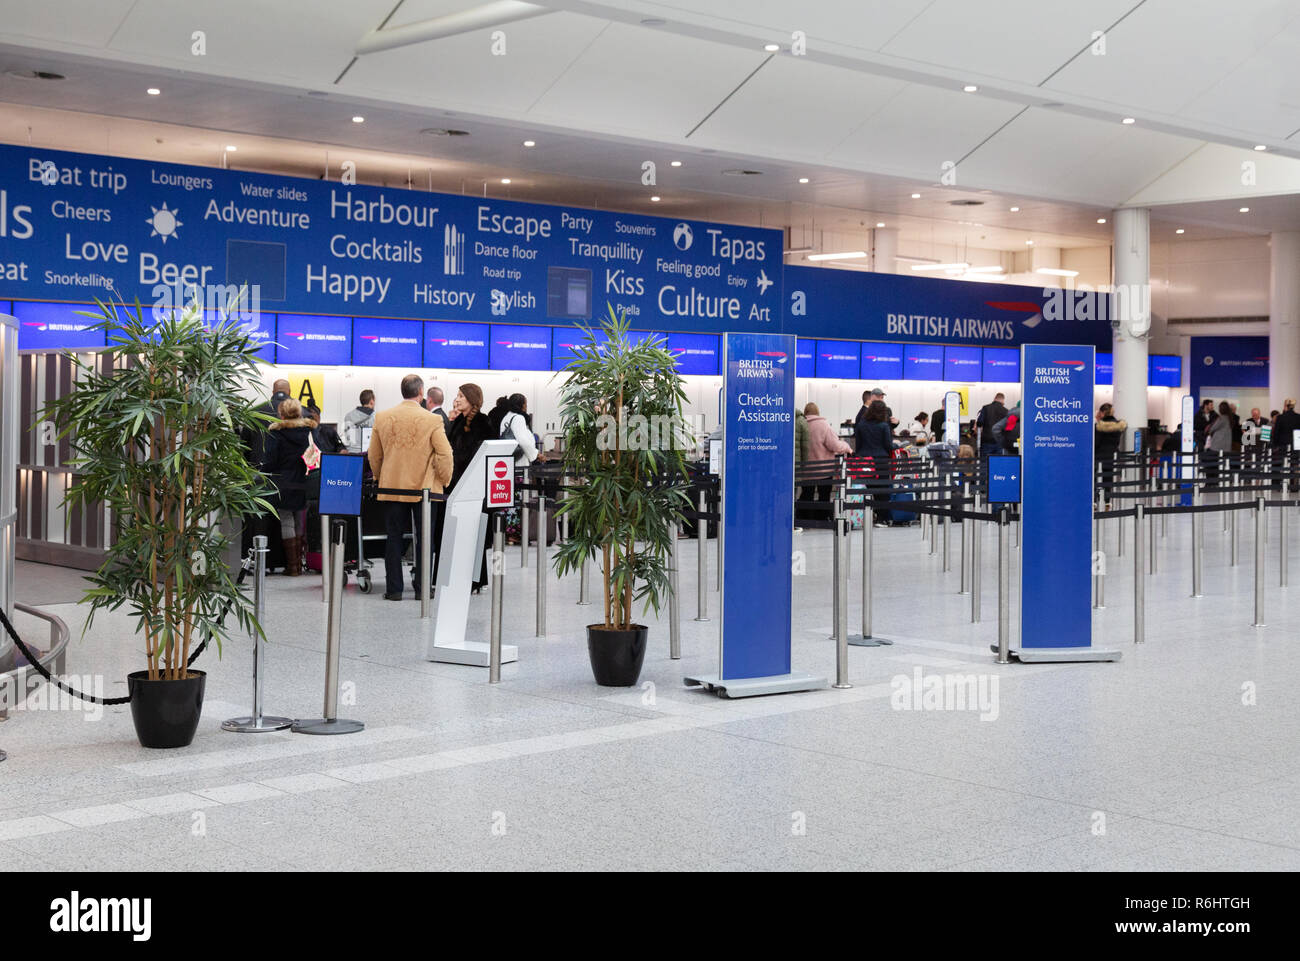 British Airways check in, Gatwick airport south terminal, Gatwick airport UK Stock Photo